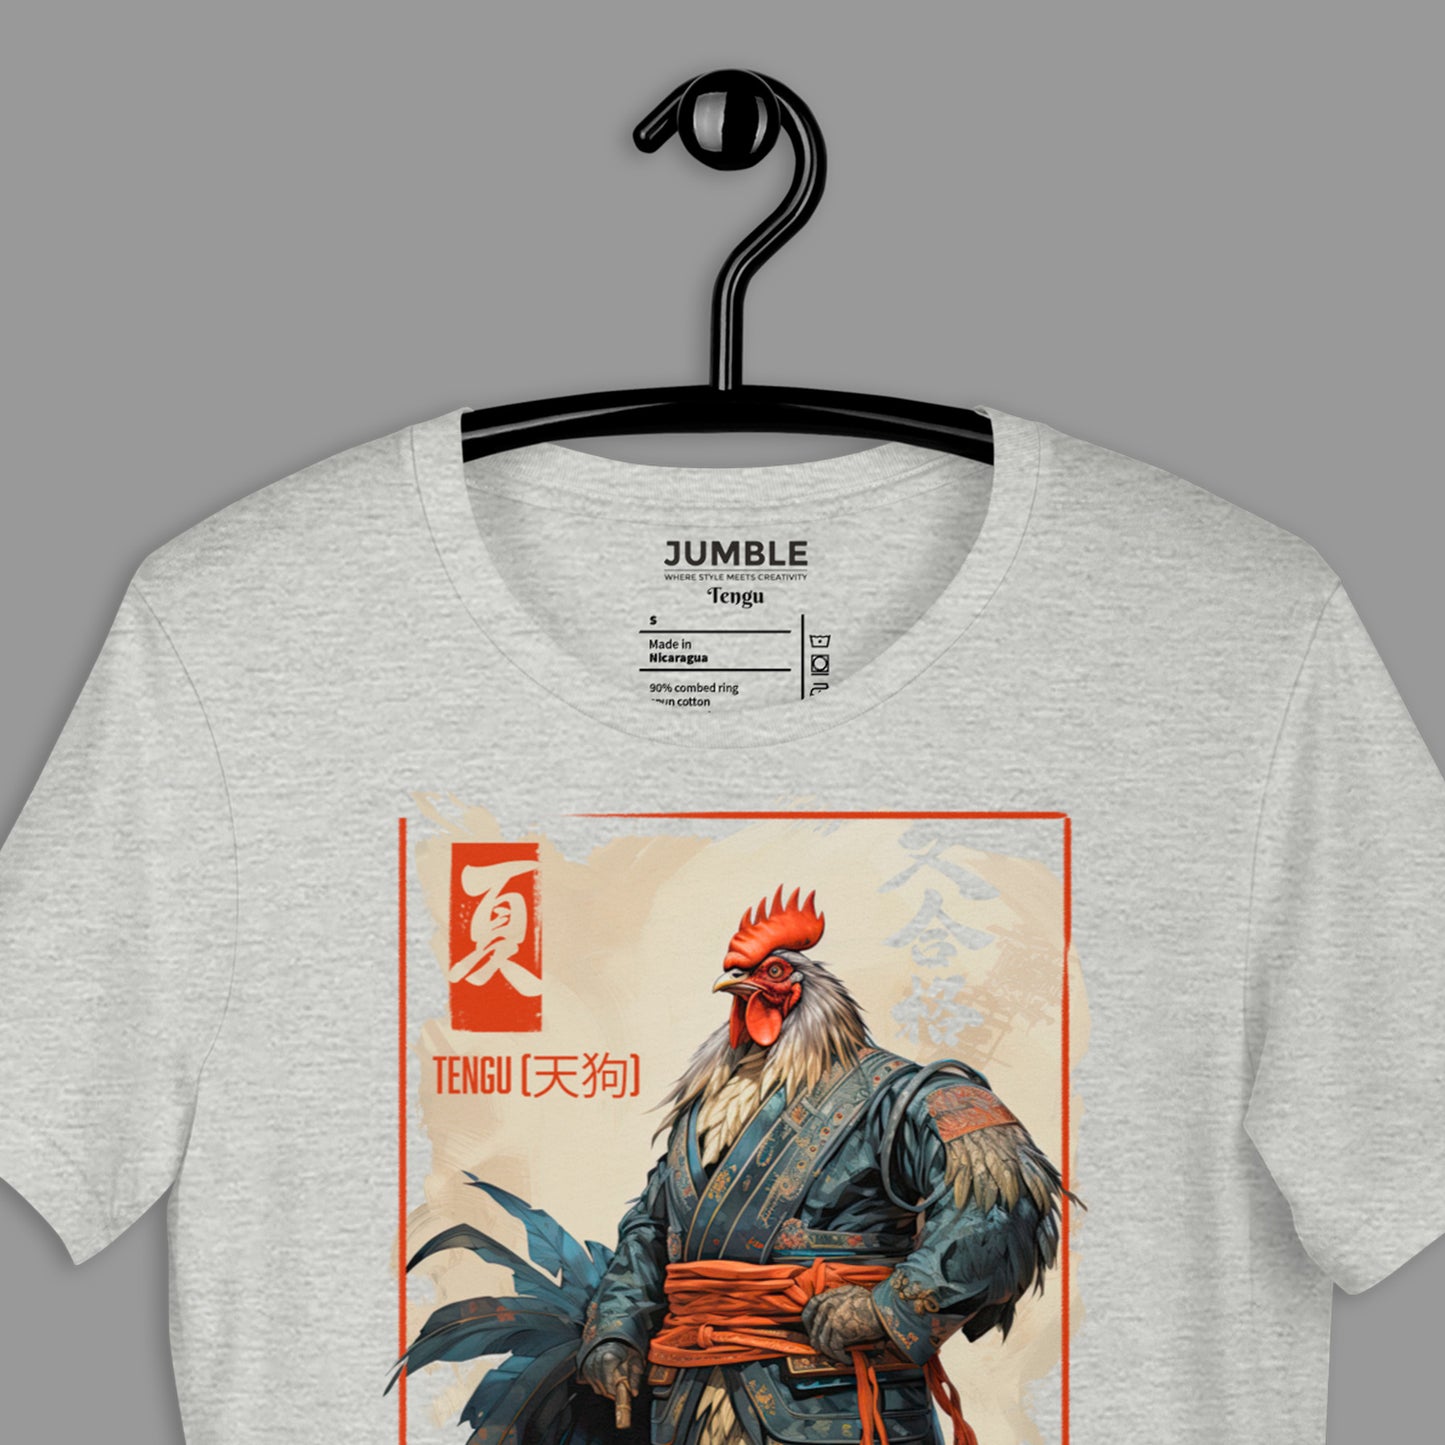 closeup of Tengu (天狗) Unisex t-shirt on a hanger